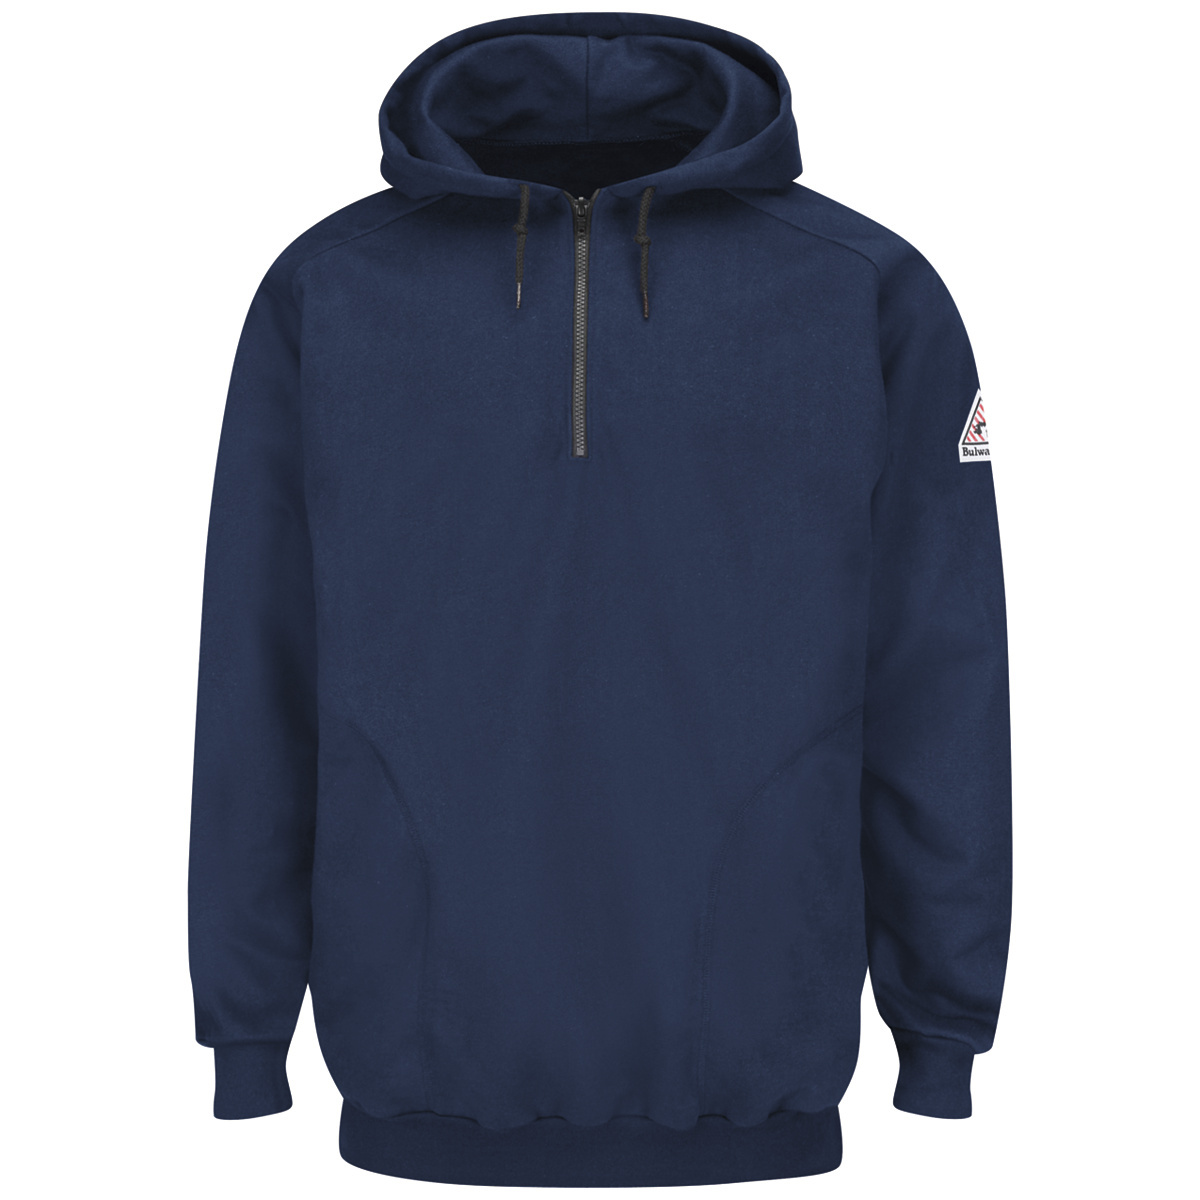 Bulwark® 4X Tall Navy Blue Cotton/Spandex Brushed Fleece Flame Resistant Hooded Sweatshirt